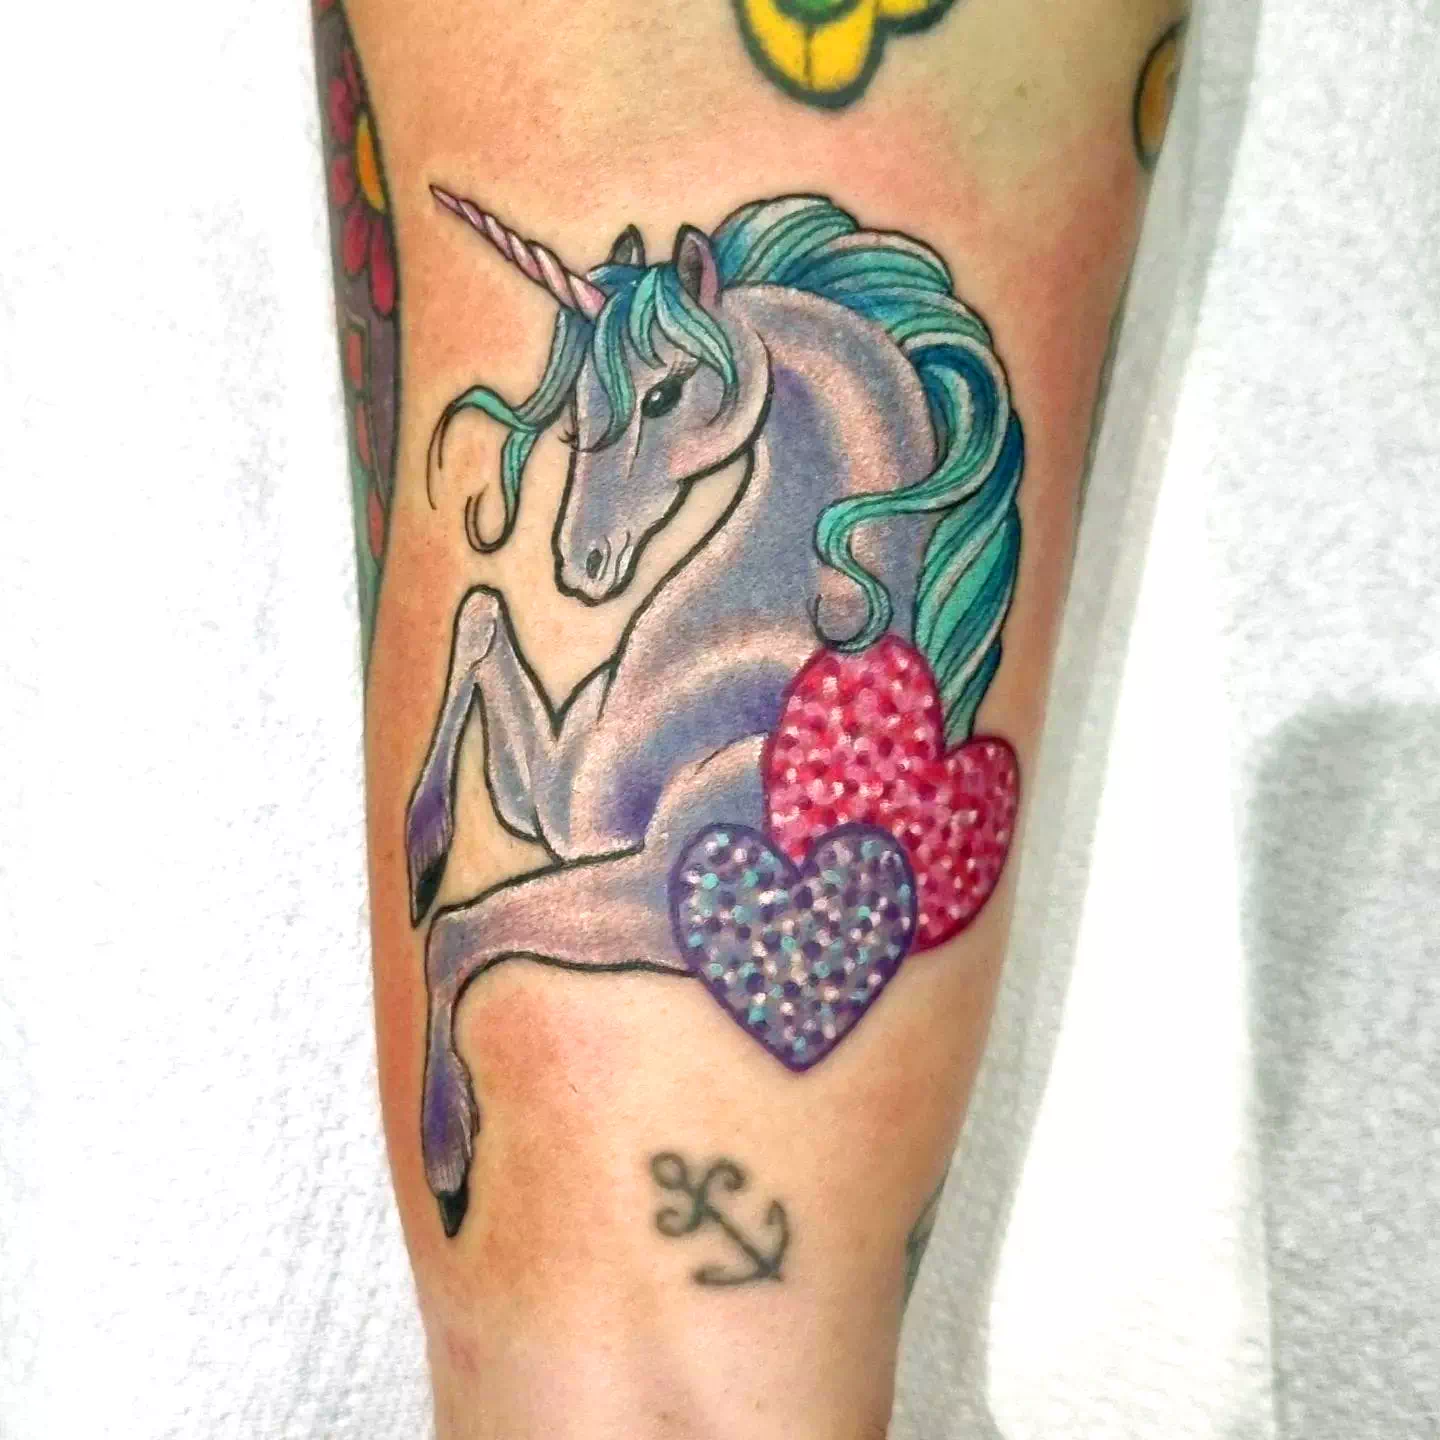 Diseño de tatuaje de unicornio con estampado de corazones